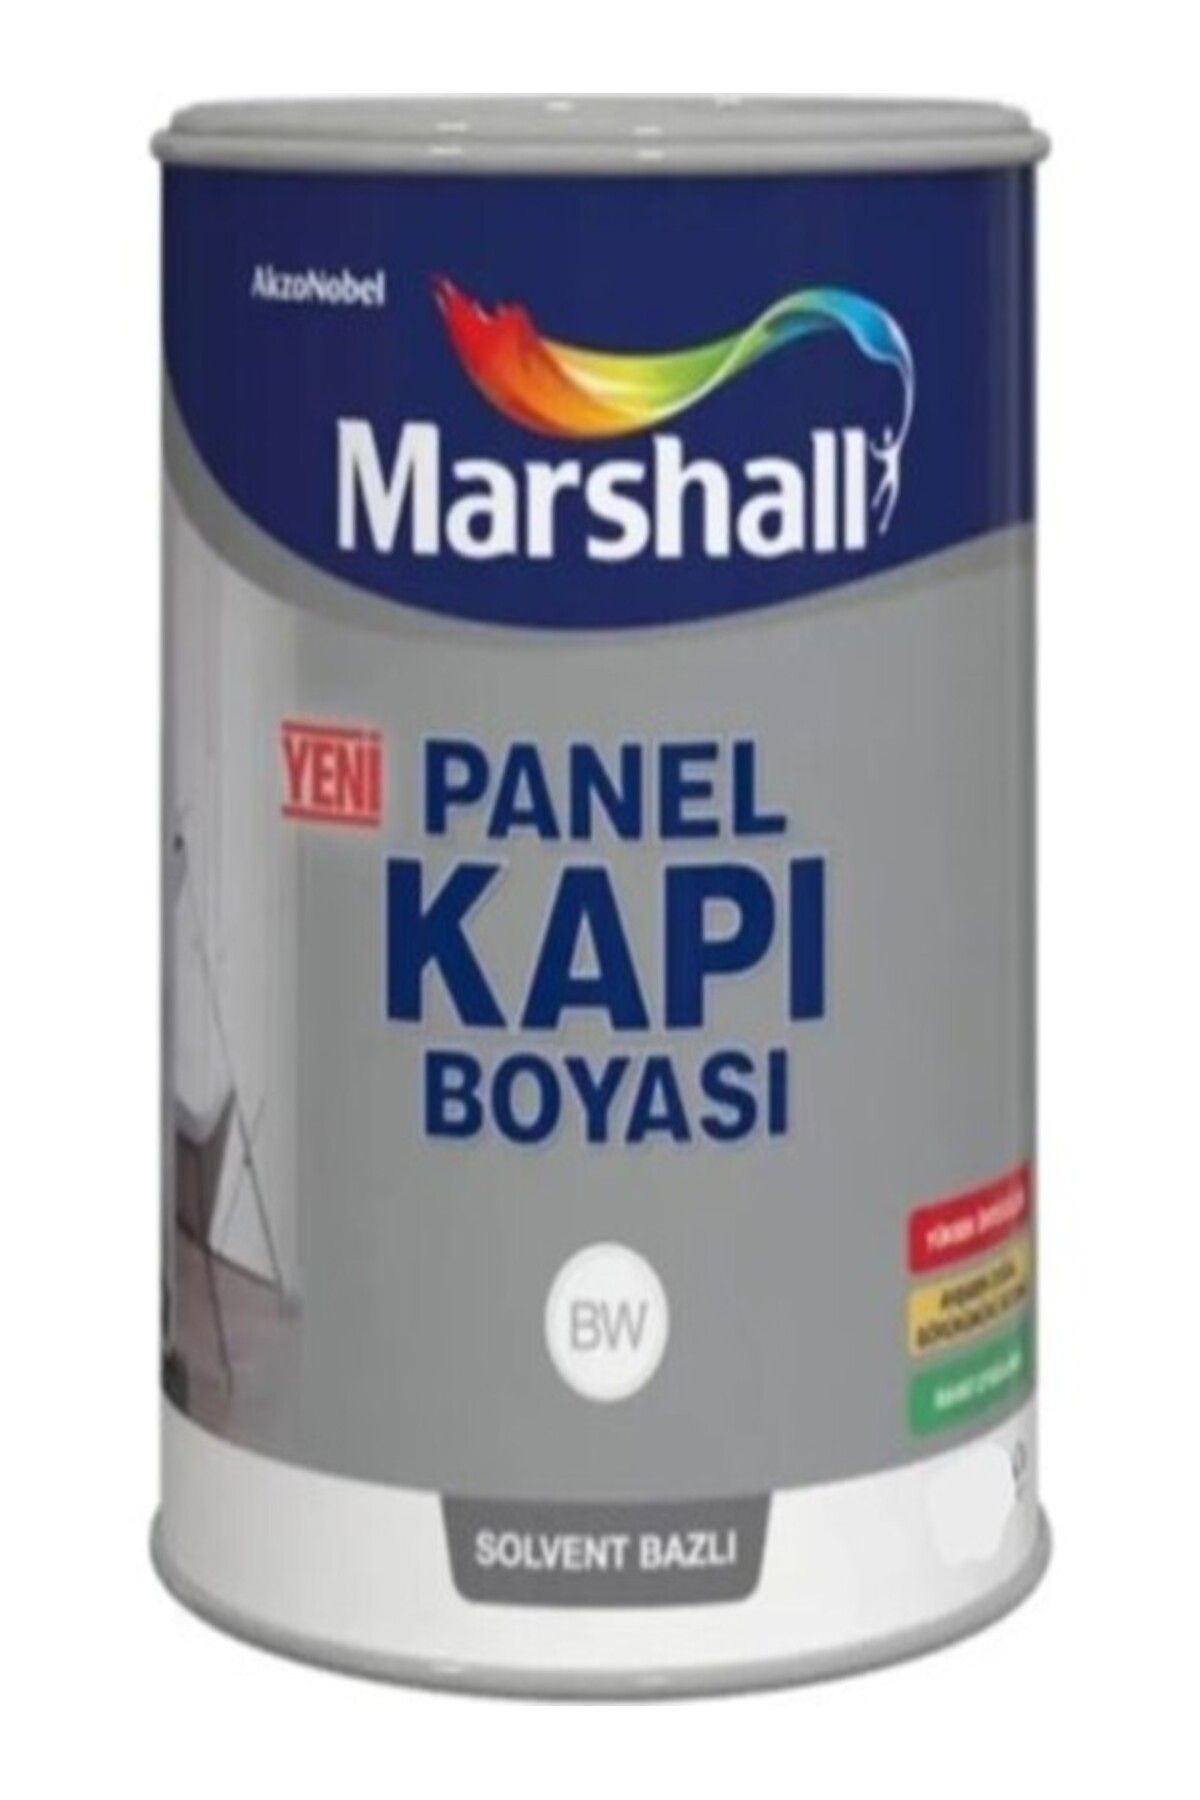 Marshall Solvent Bazlı Panel Kapı Boyası BEYAZ 1 LT